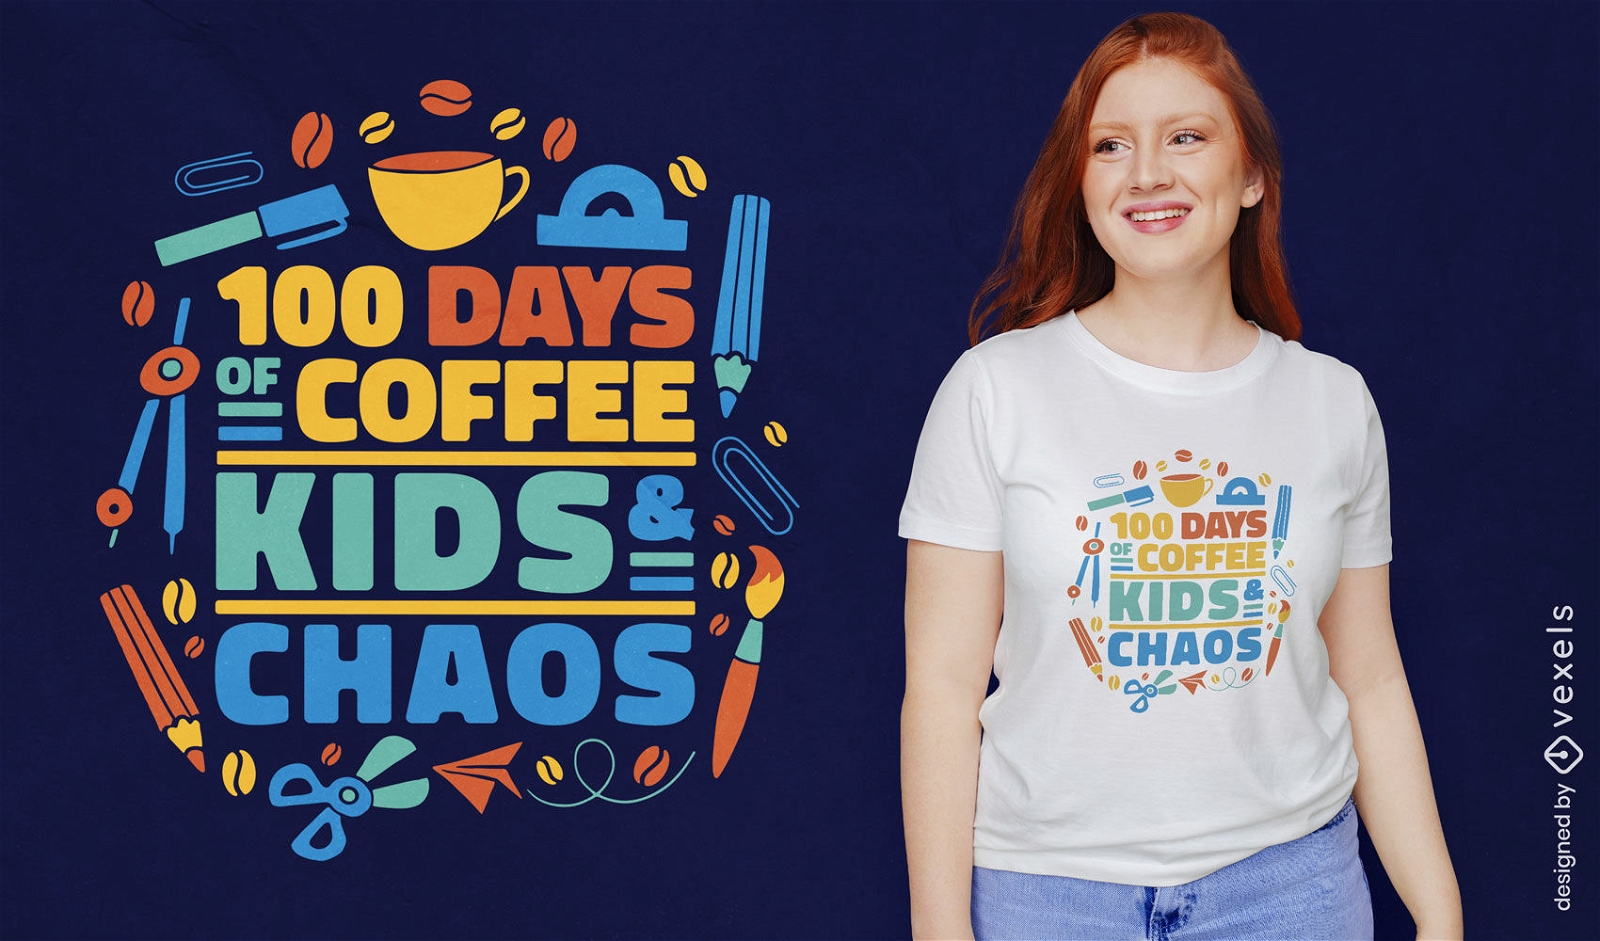 School teacher coffee quote t-shirt design